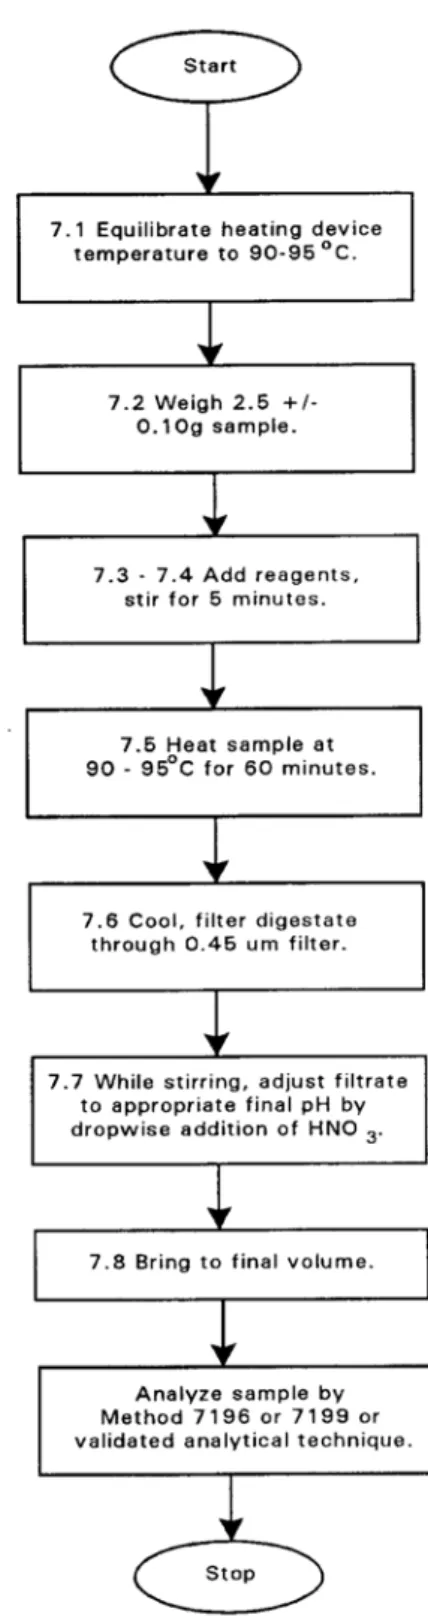 Fig. 4. Flowchart of alkaline digestion for hexavalent chromium (USEPA, 1996). 